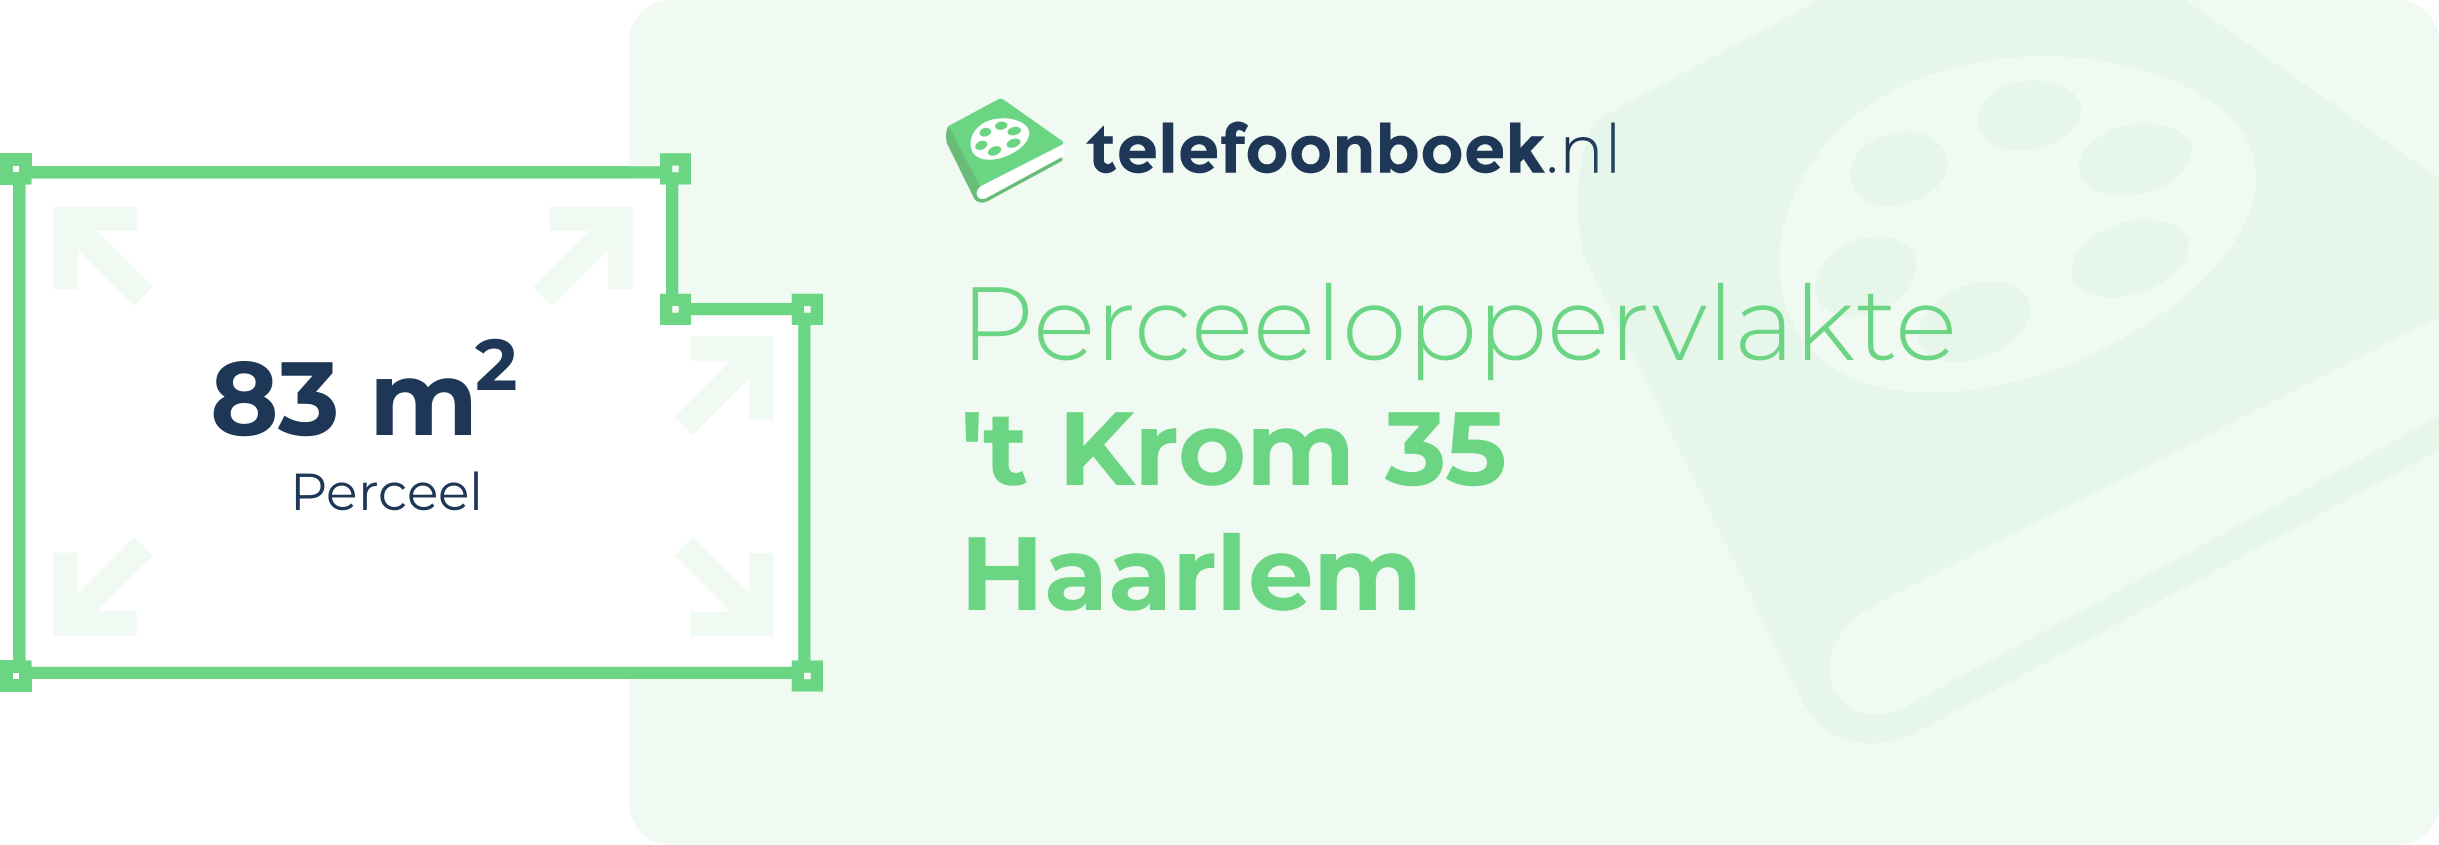 Perceeloppervlakte 't Krom 35 Haarlem